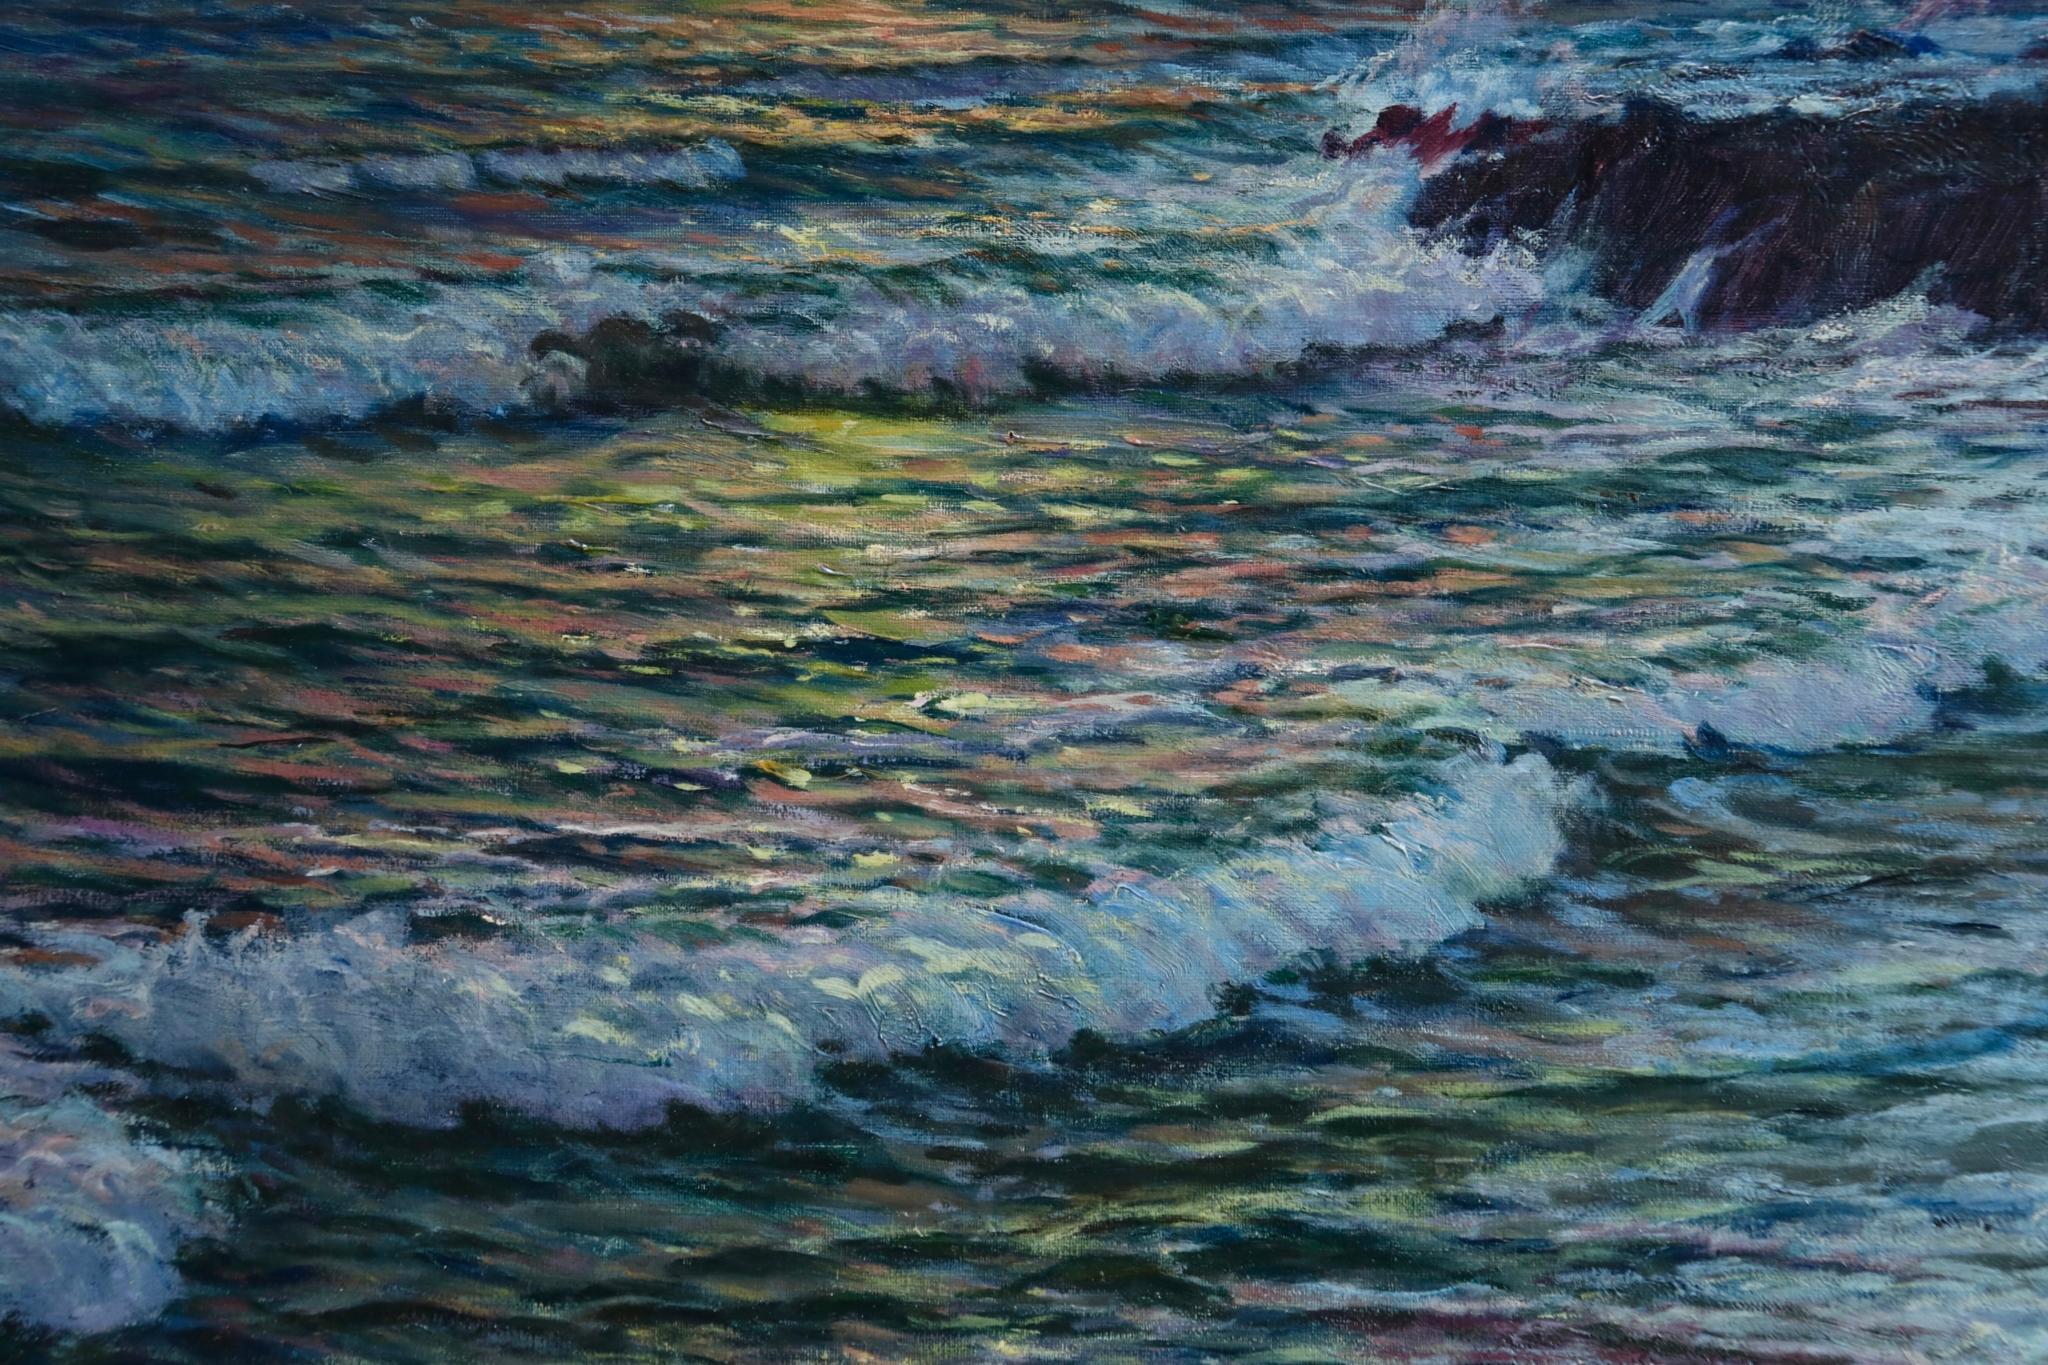 Sunset - Impressionist Oil, Sunset over Seascape by Vartan Makhokhian 7